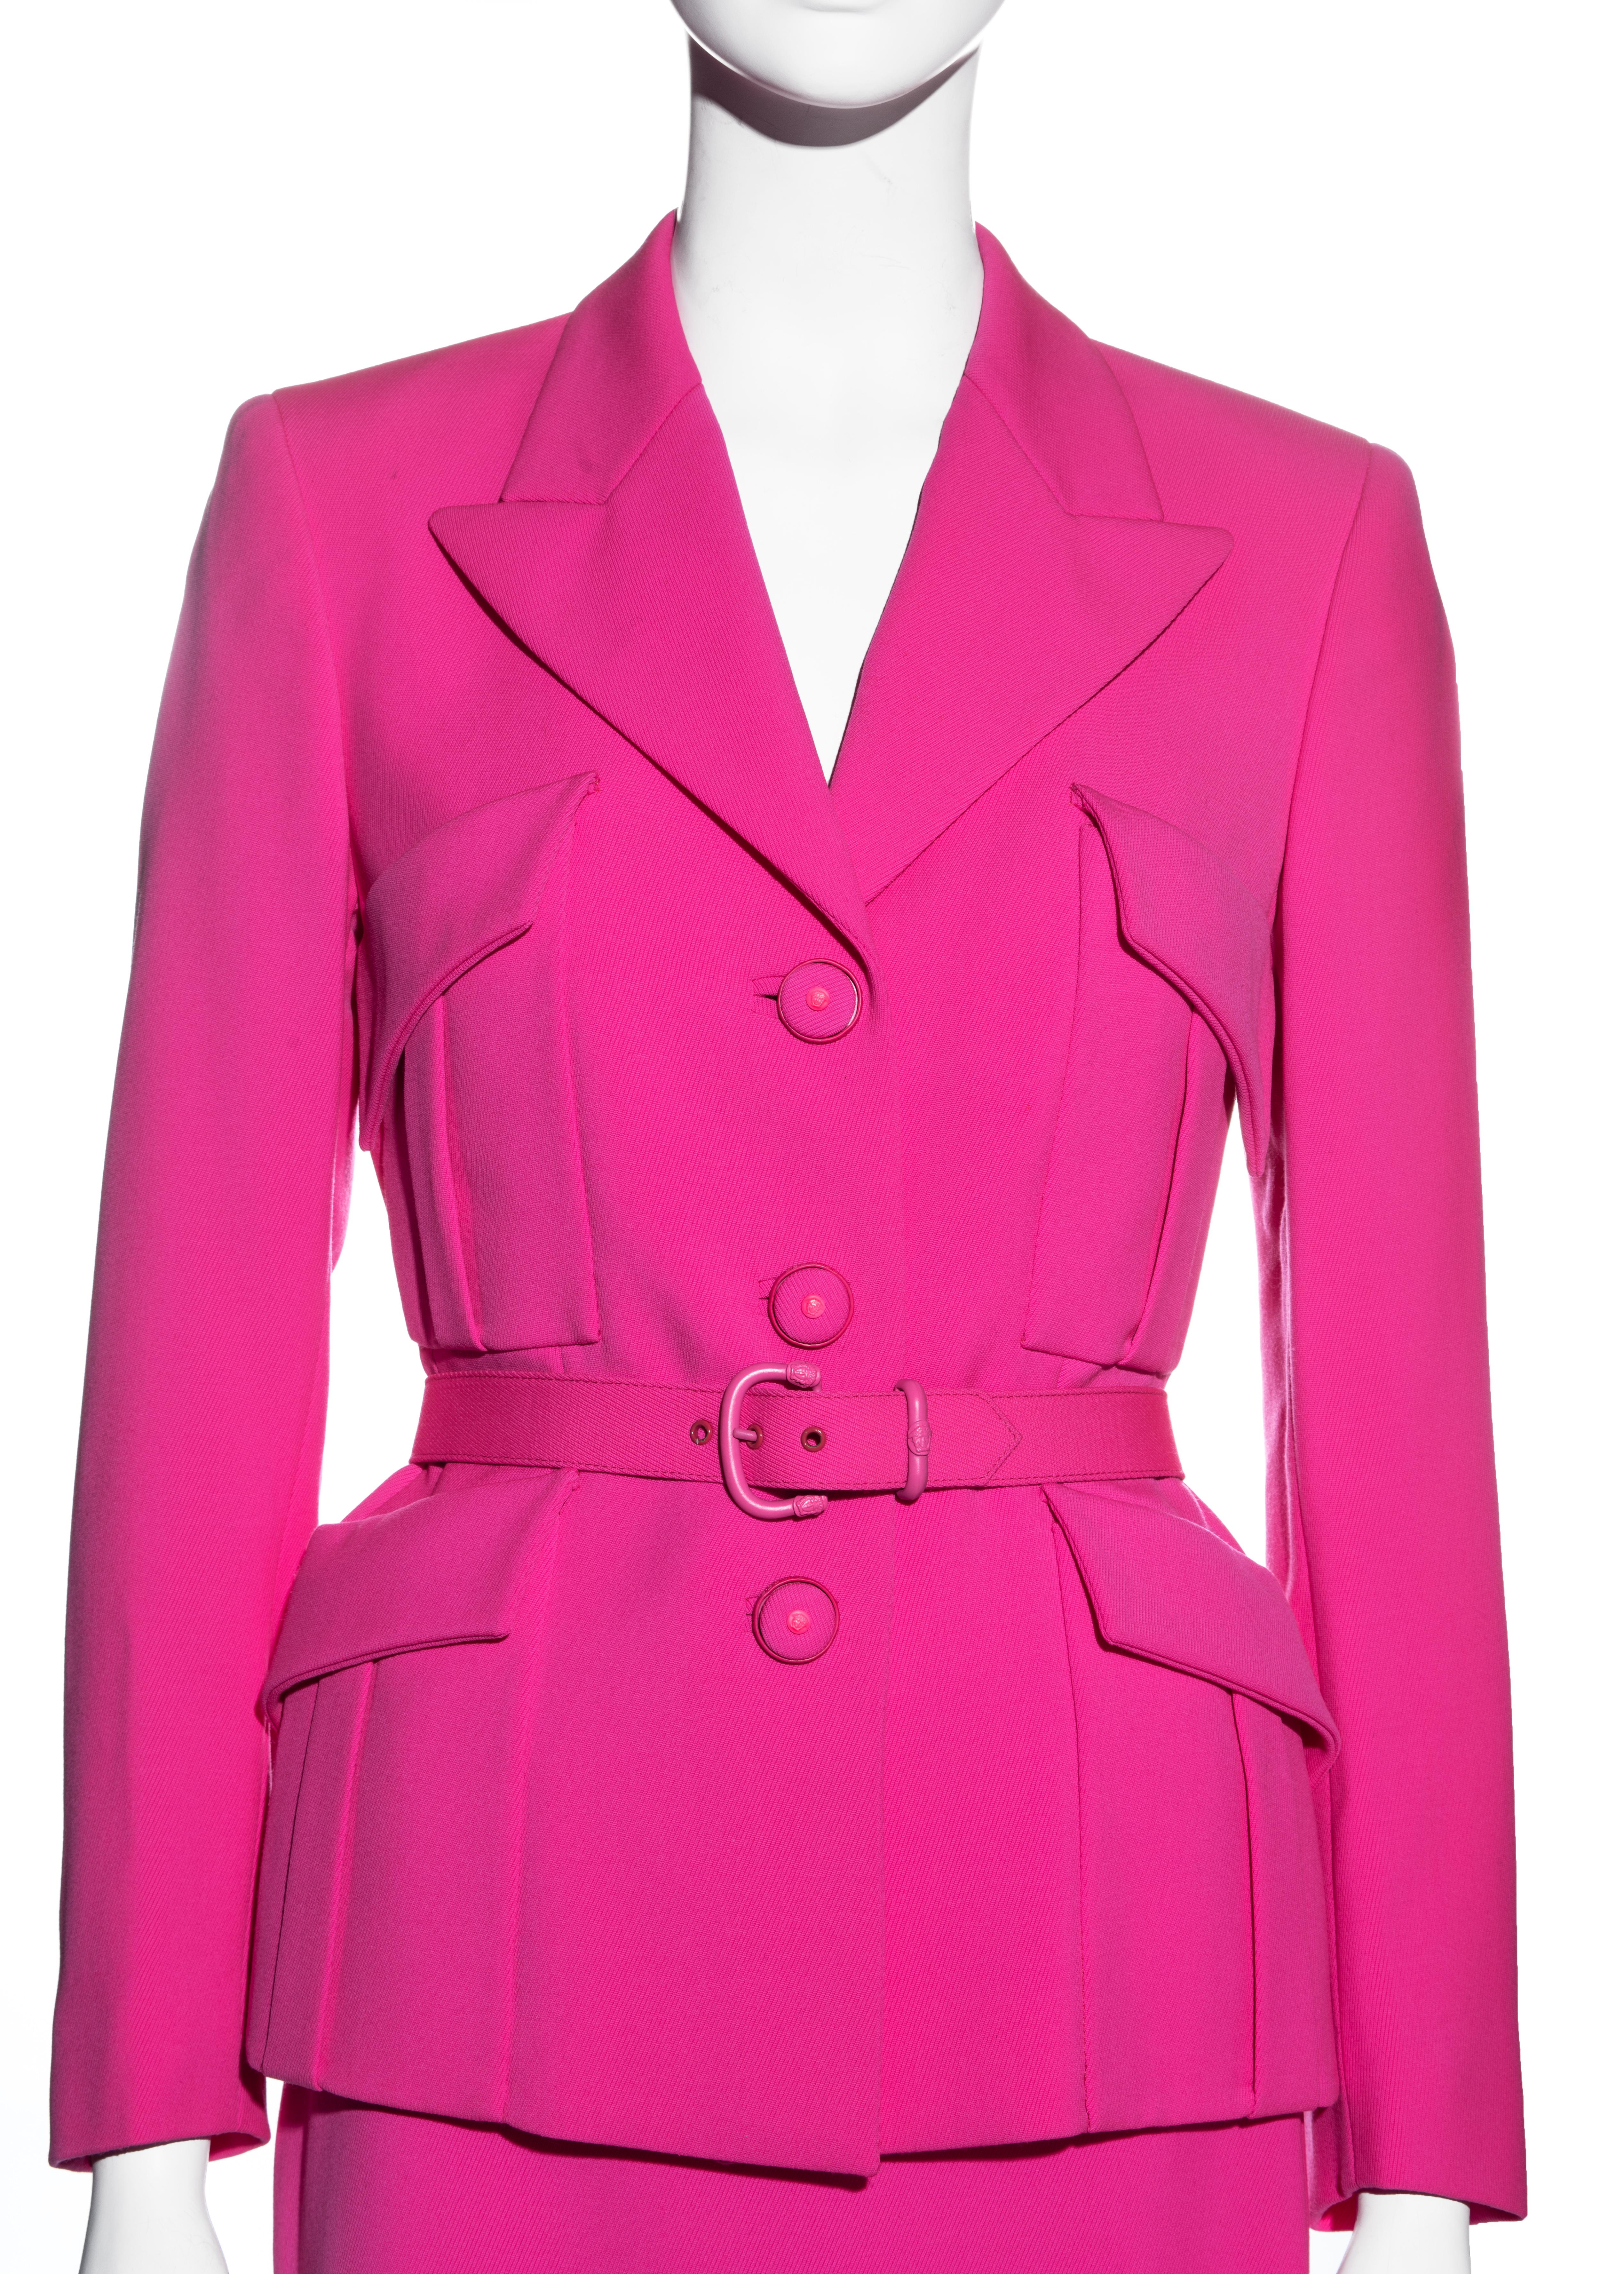 neon pink suit